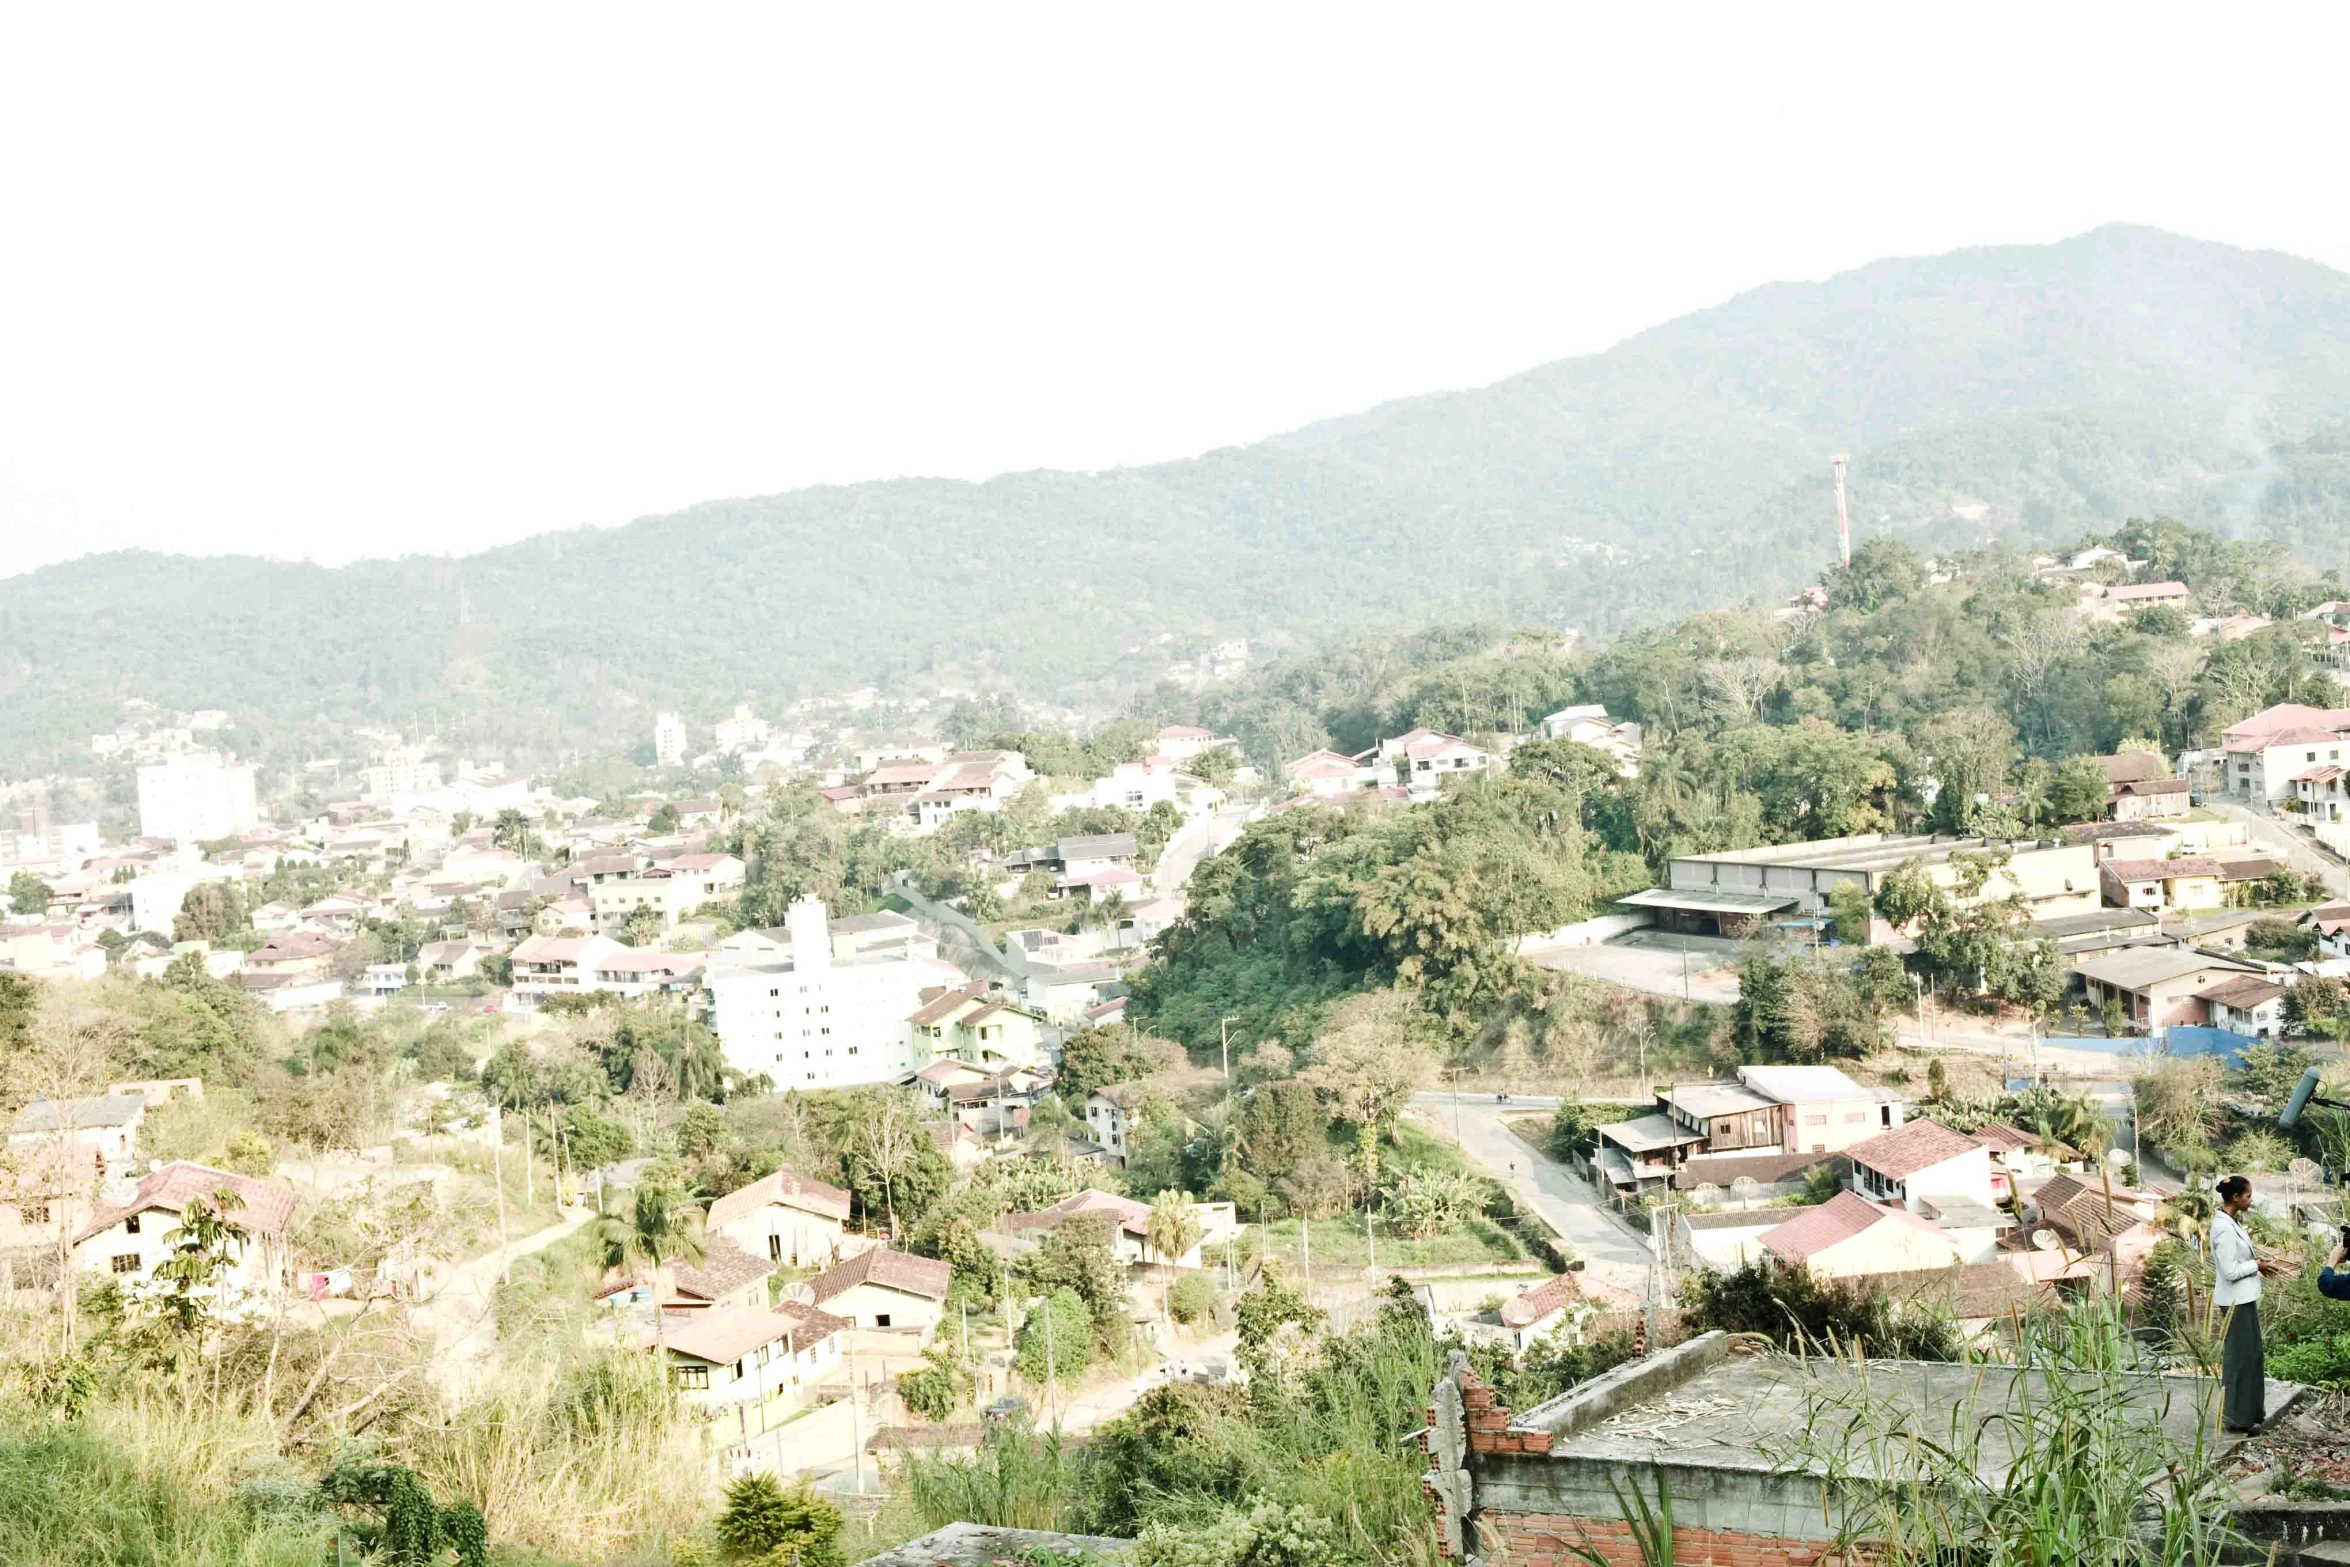 a rural village below a mountainous valley